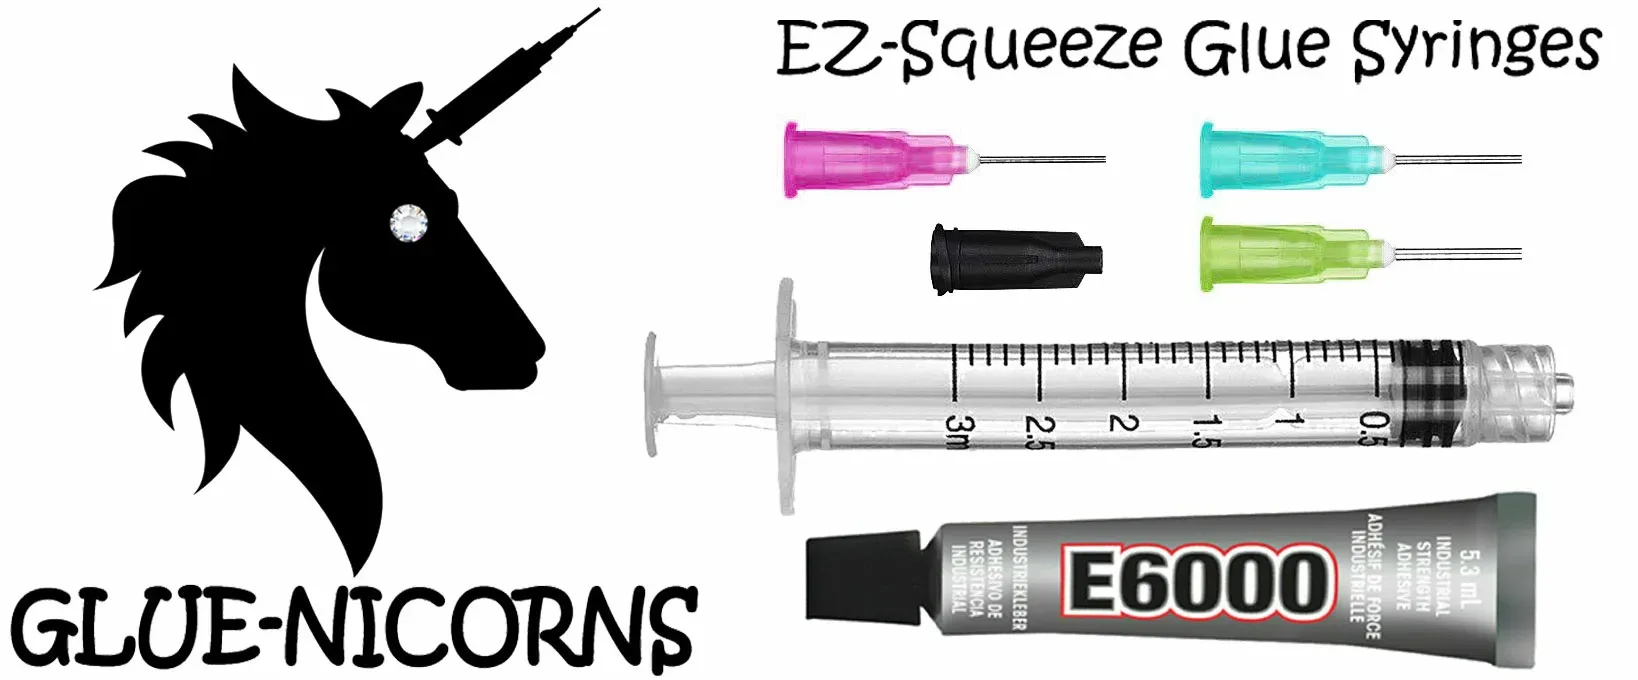 How to Use a Glue Syringe - glue applicator syringe for